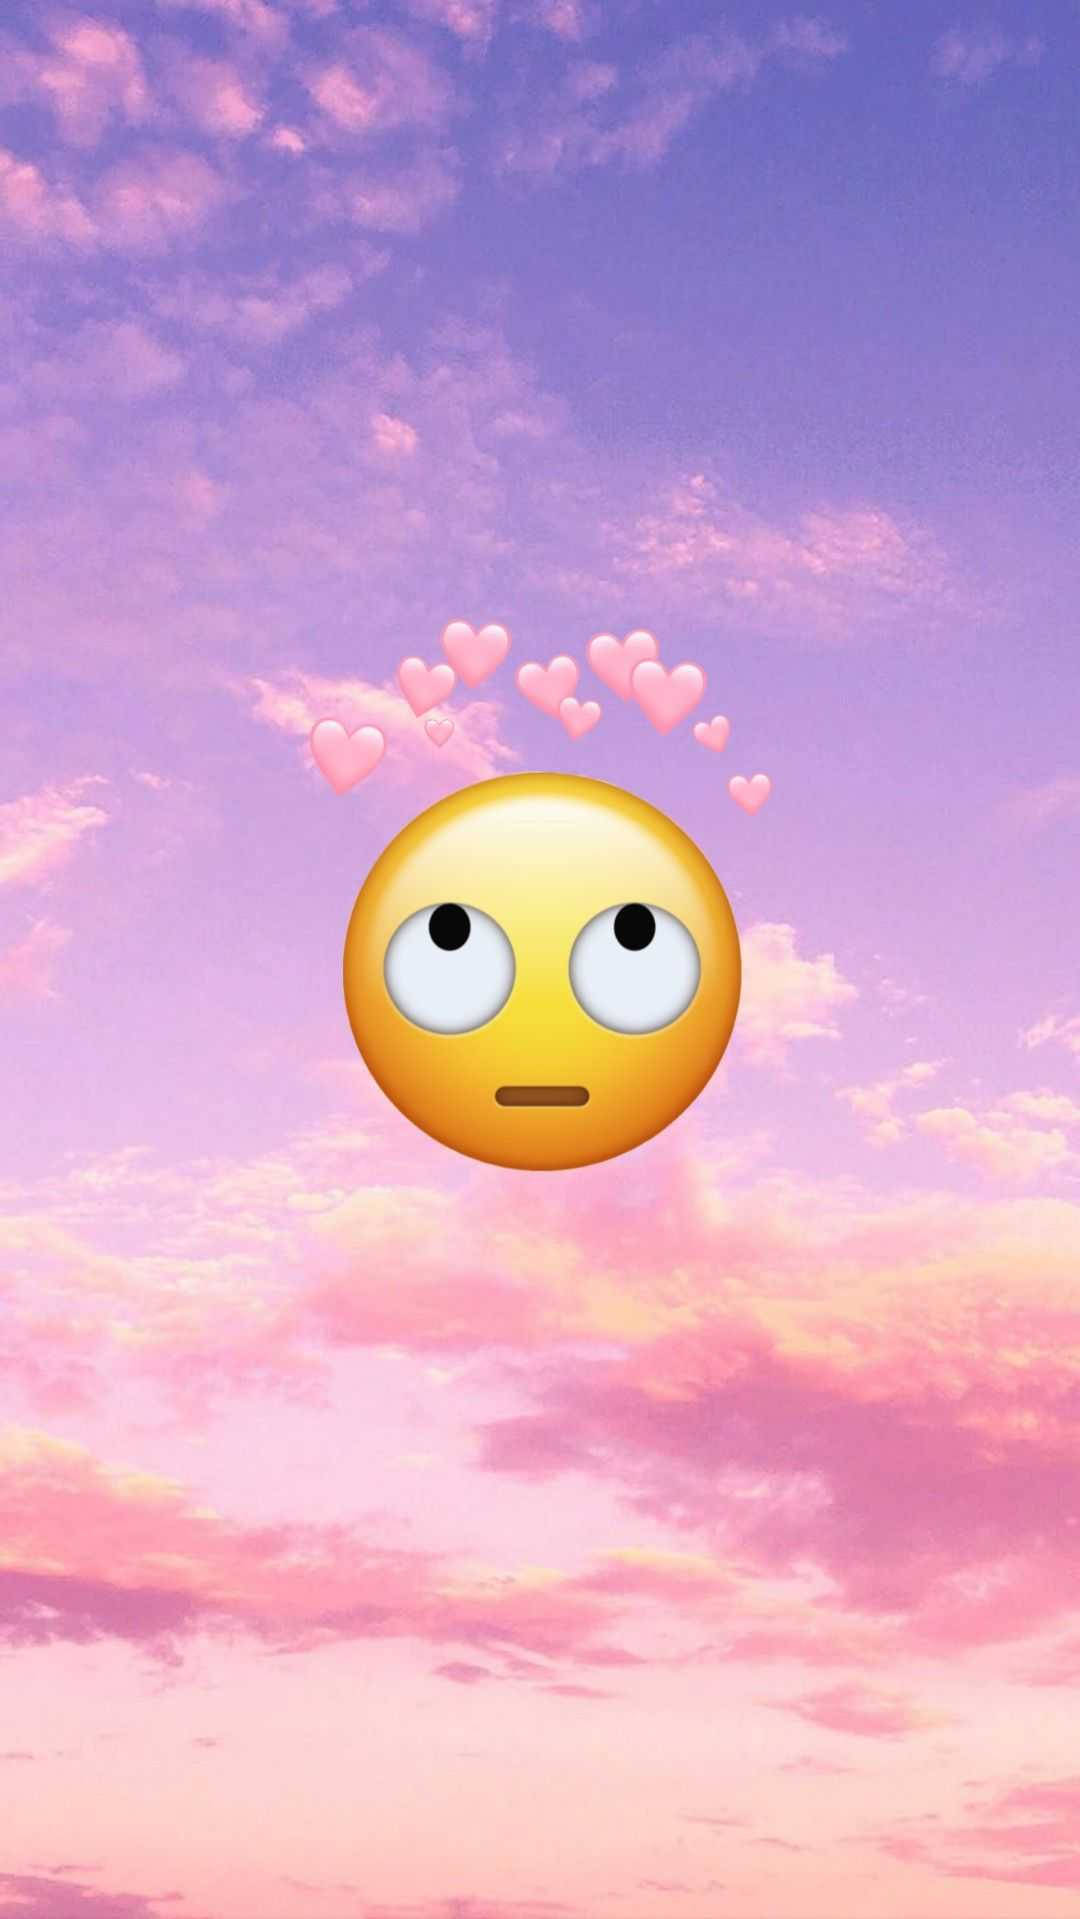 Emoji 1080X1919 Wallpaper and Background Image